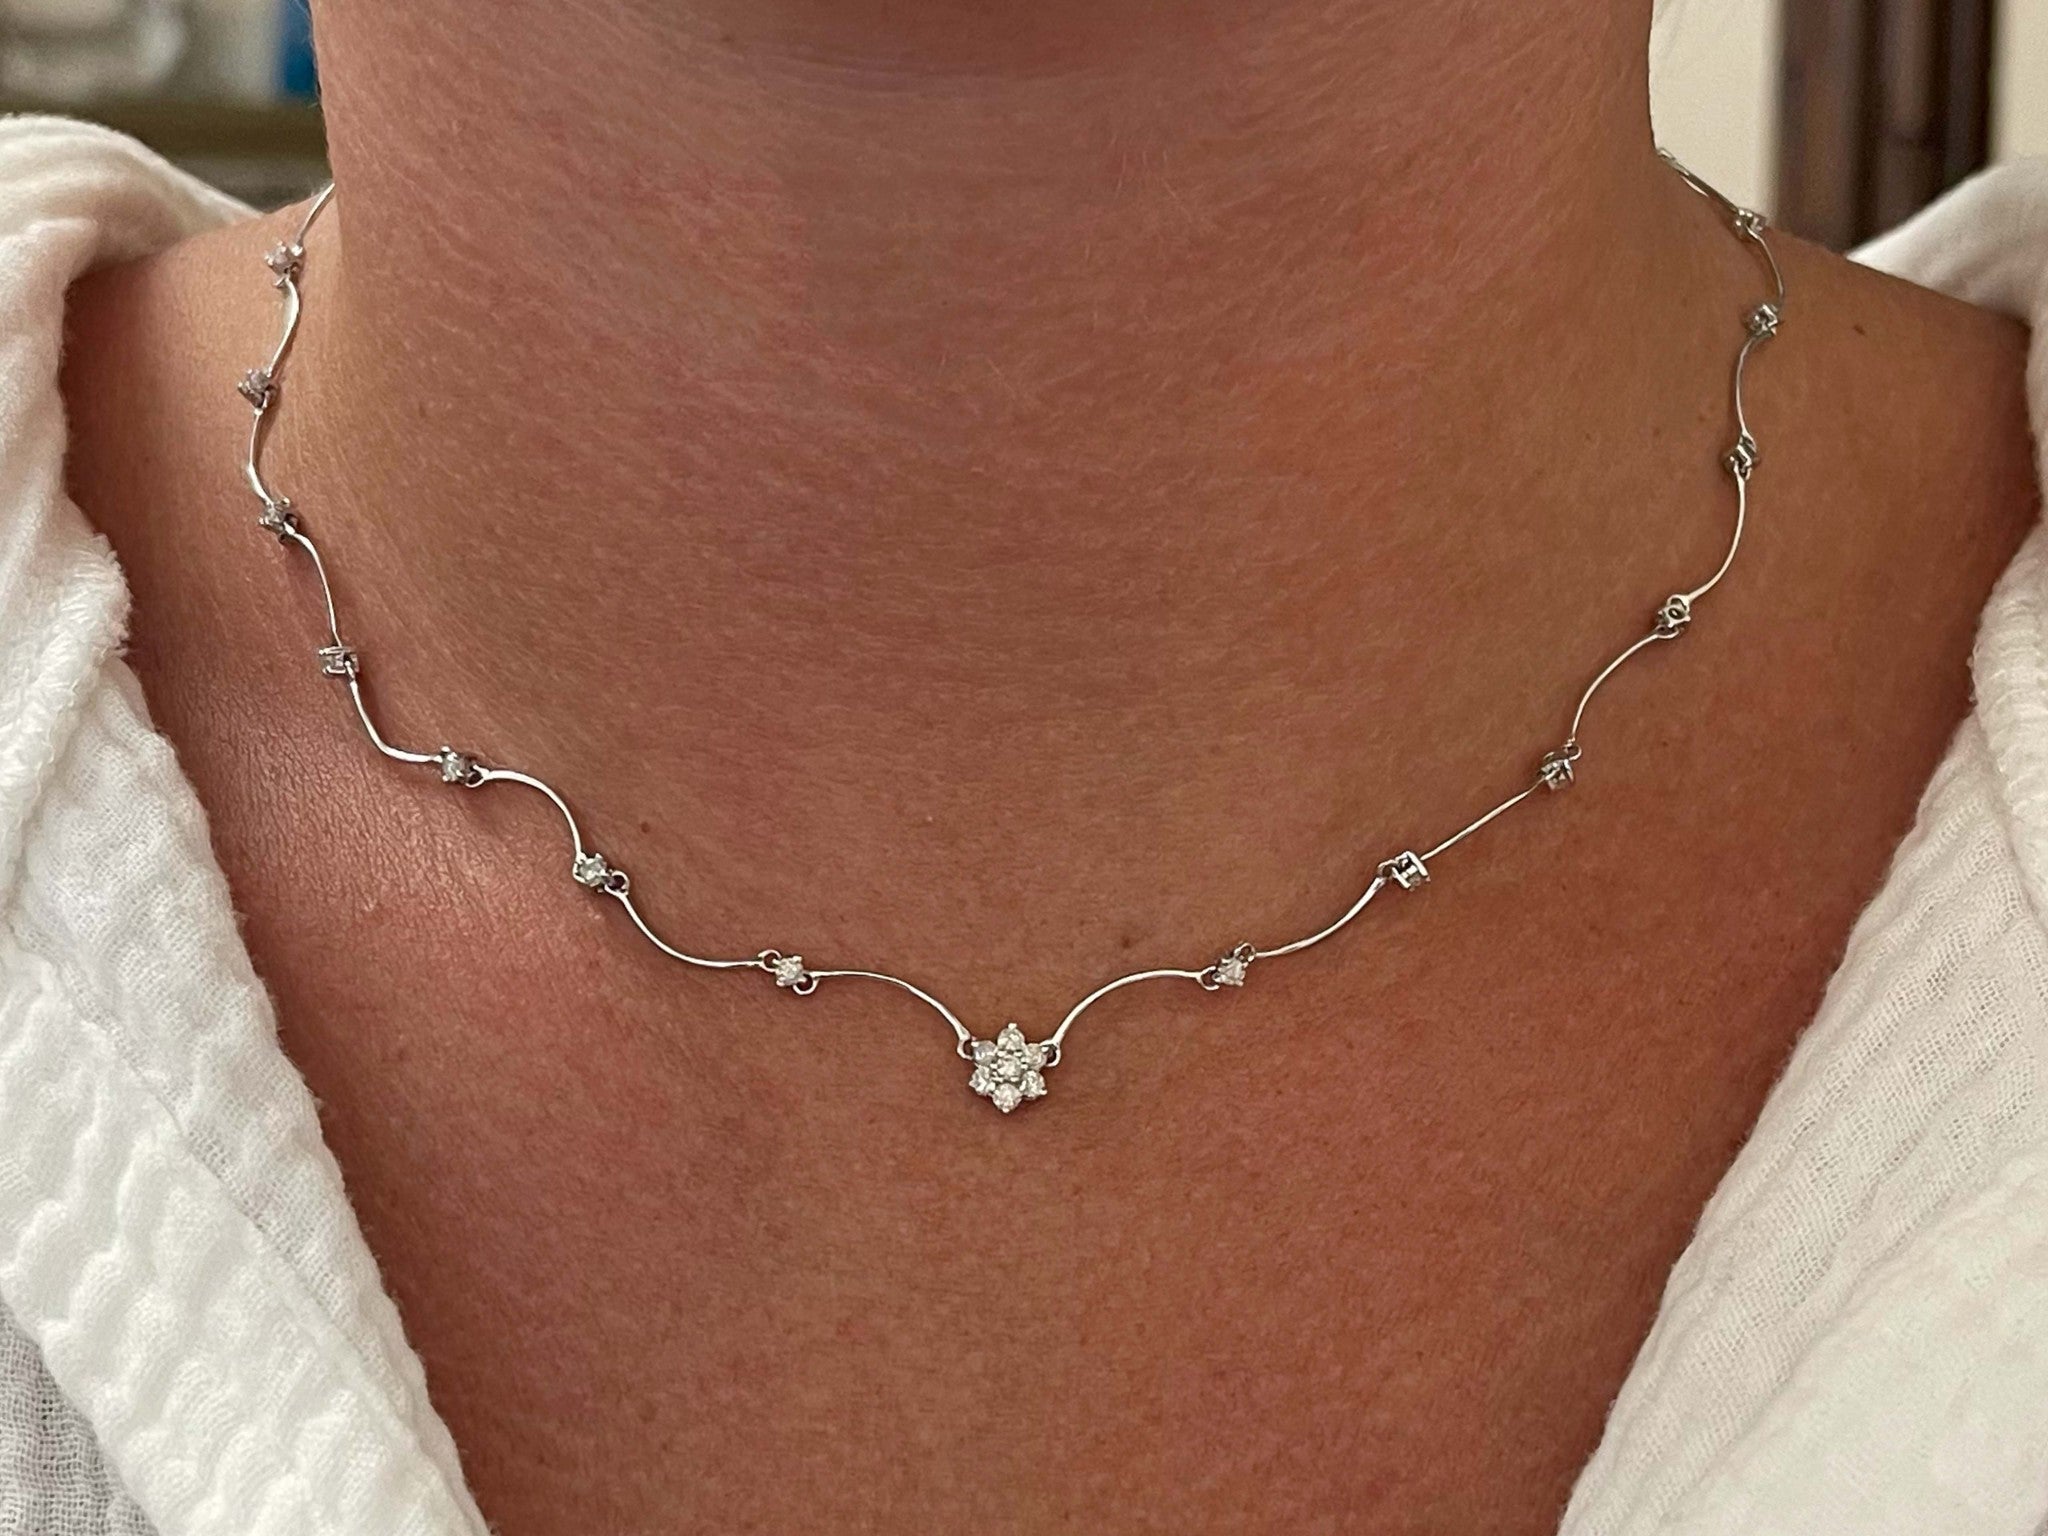 Wavy Diamond Flower Diamond Necklace in 18k White Gold